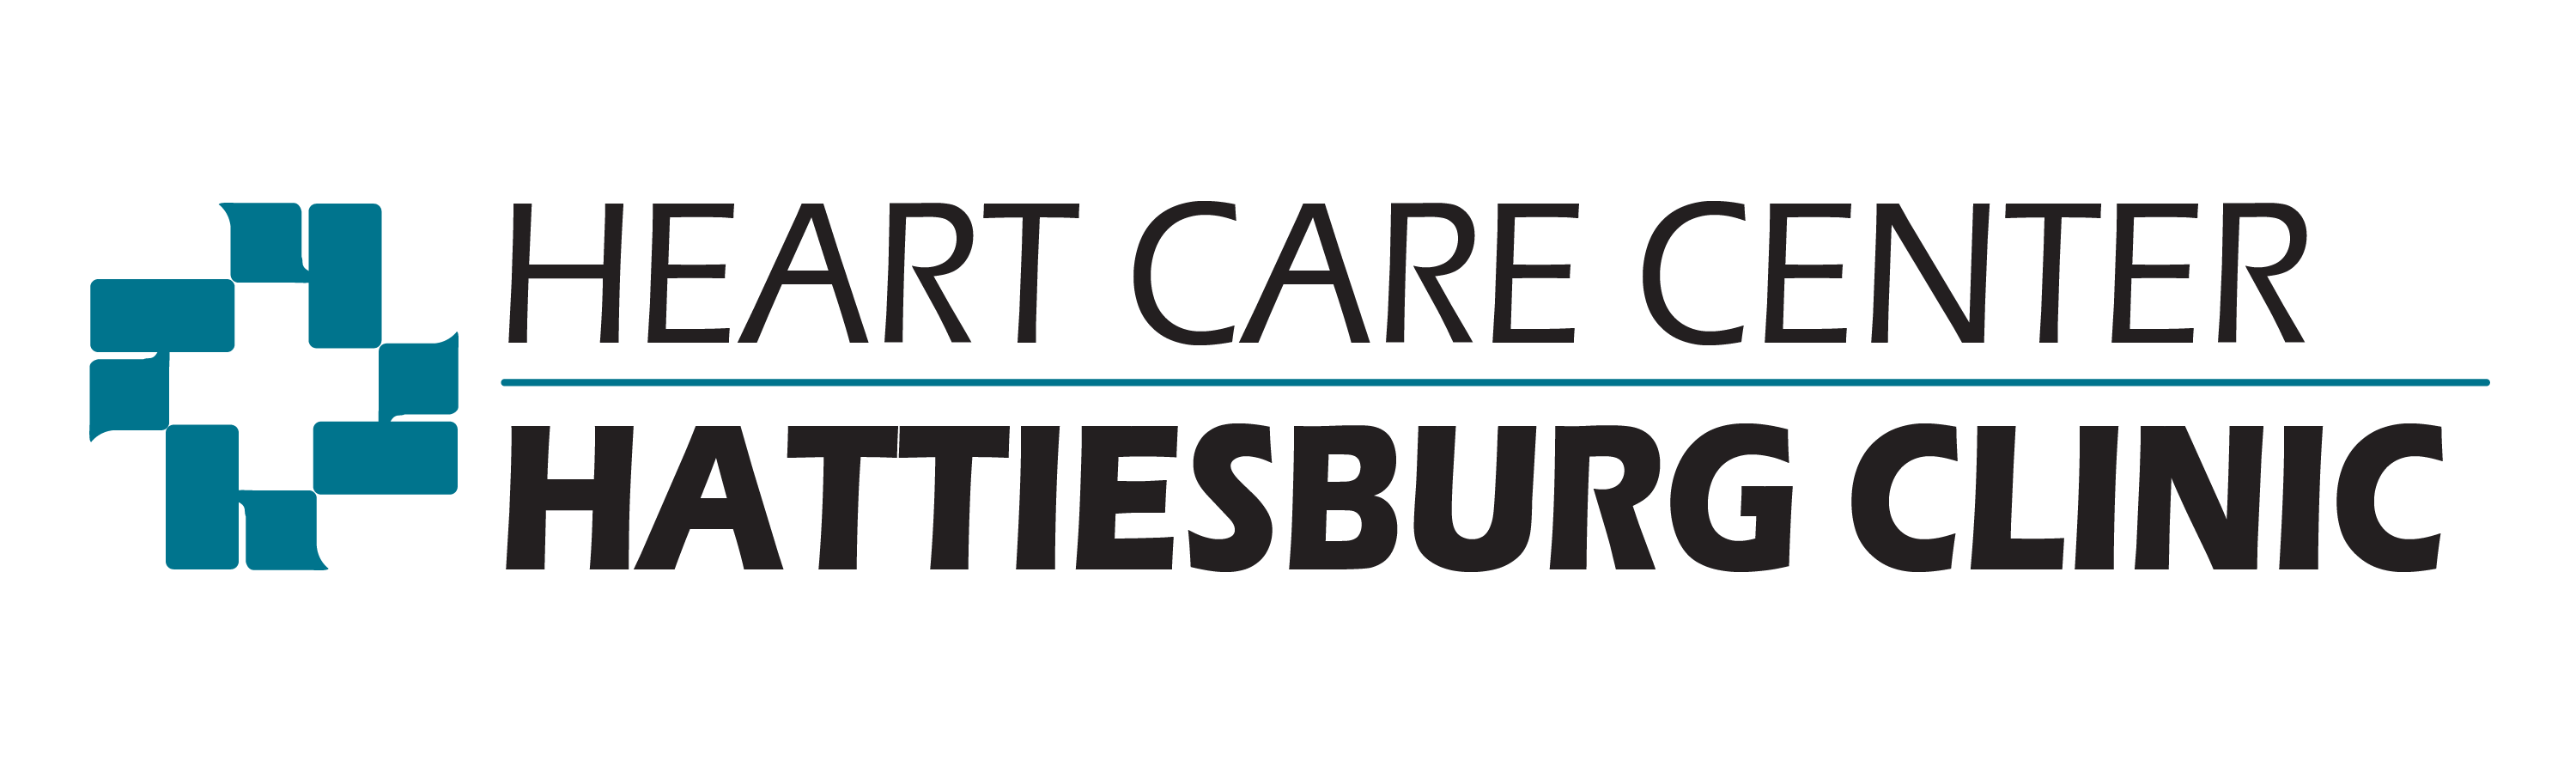 Heart Care Center logo